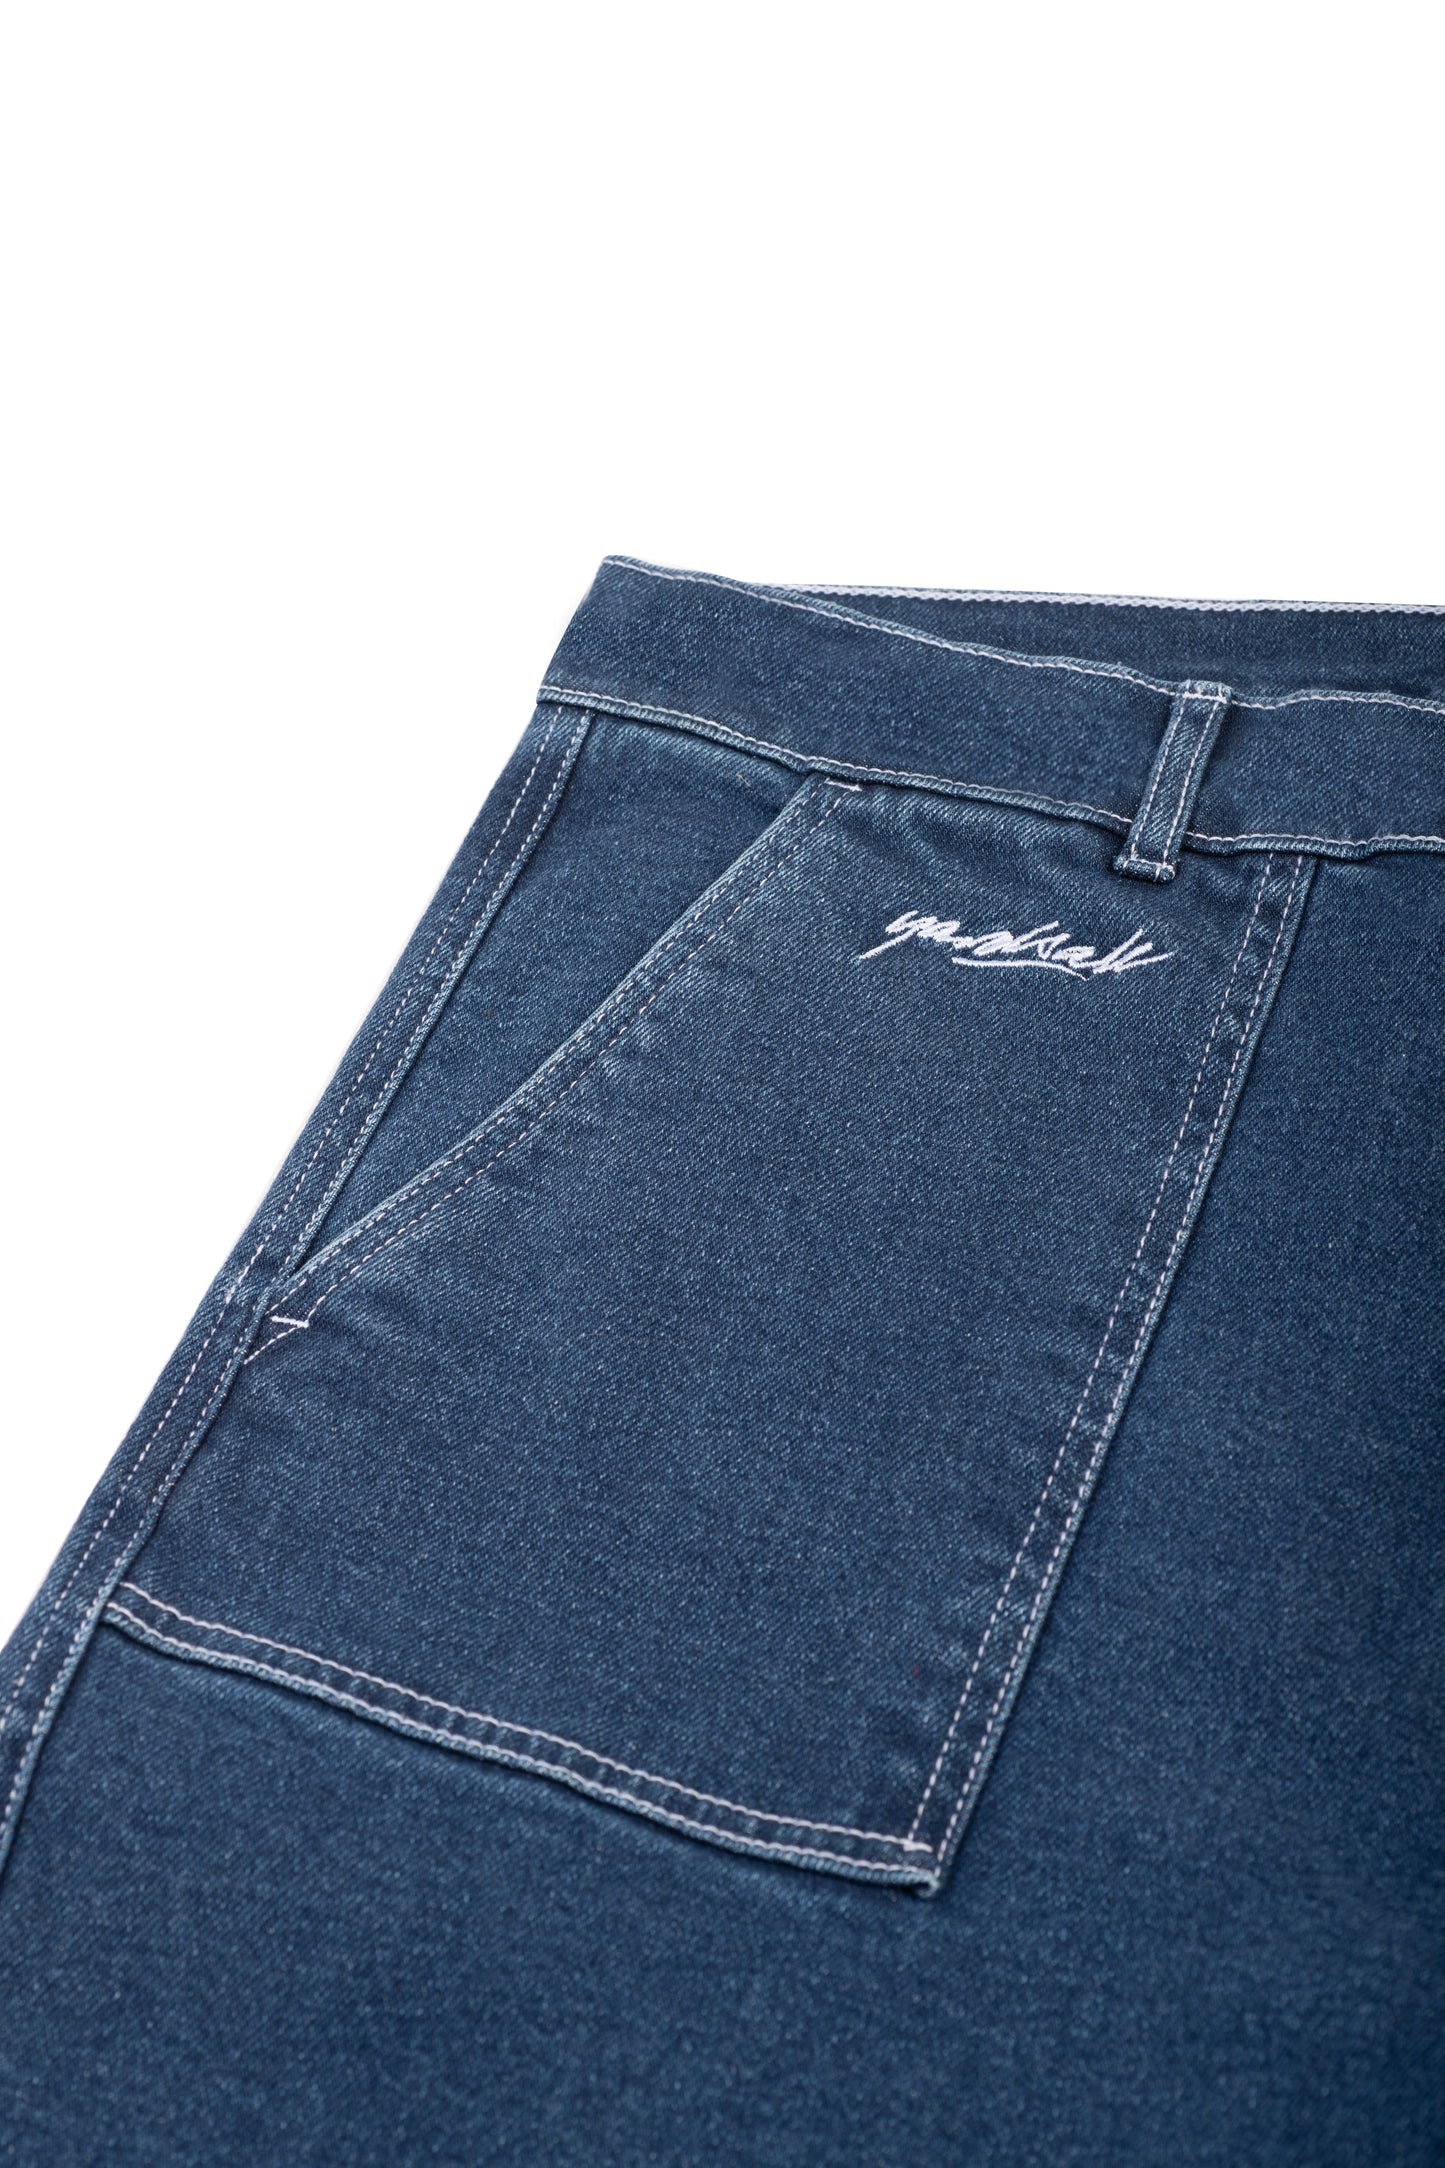 Odyssey Jeans (Blue)